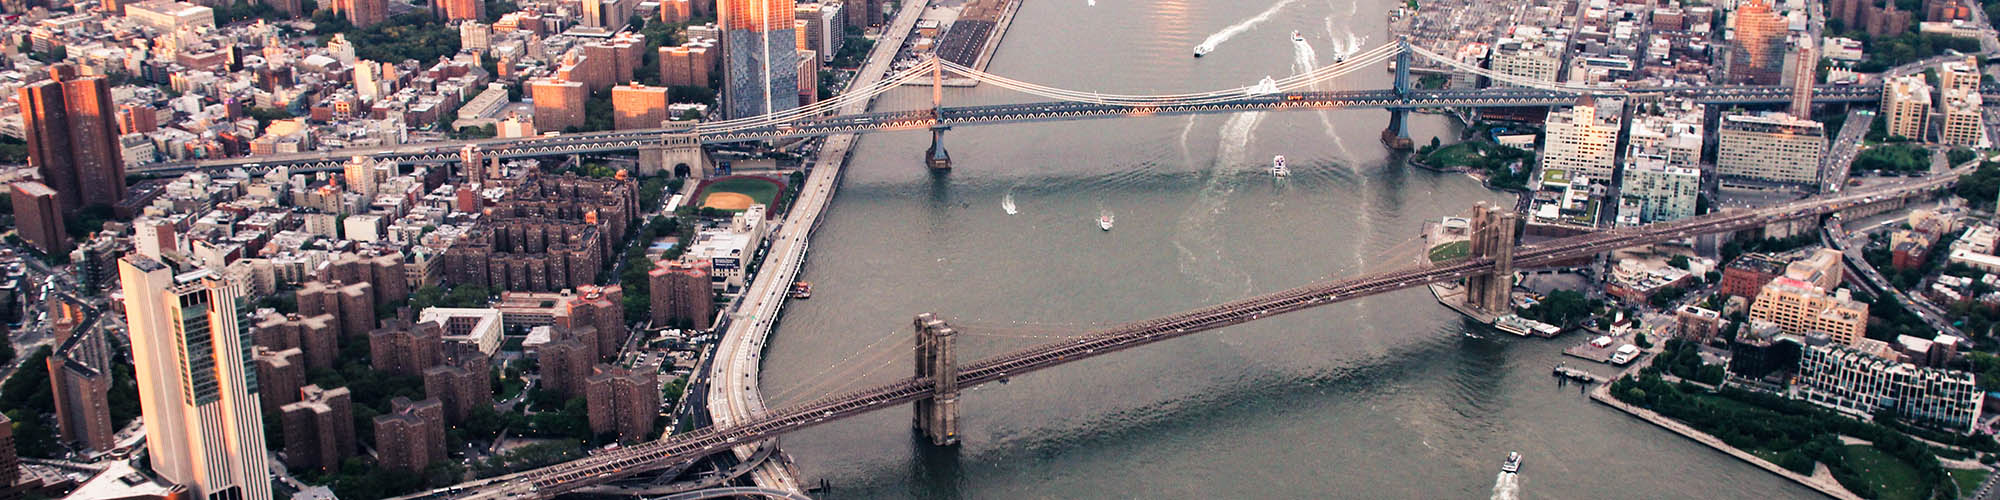 Brooklyn East River Aerial